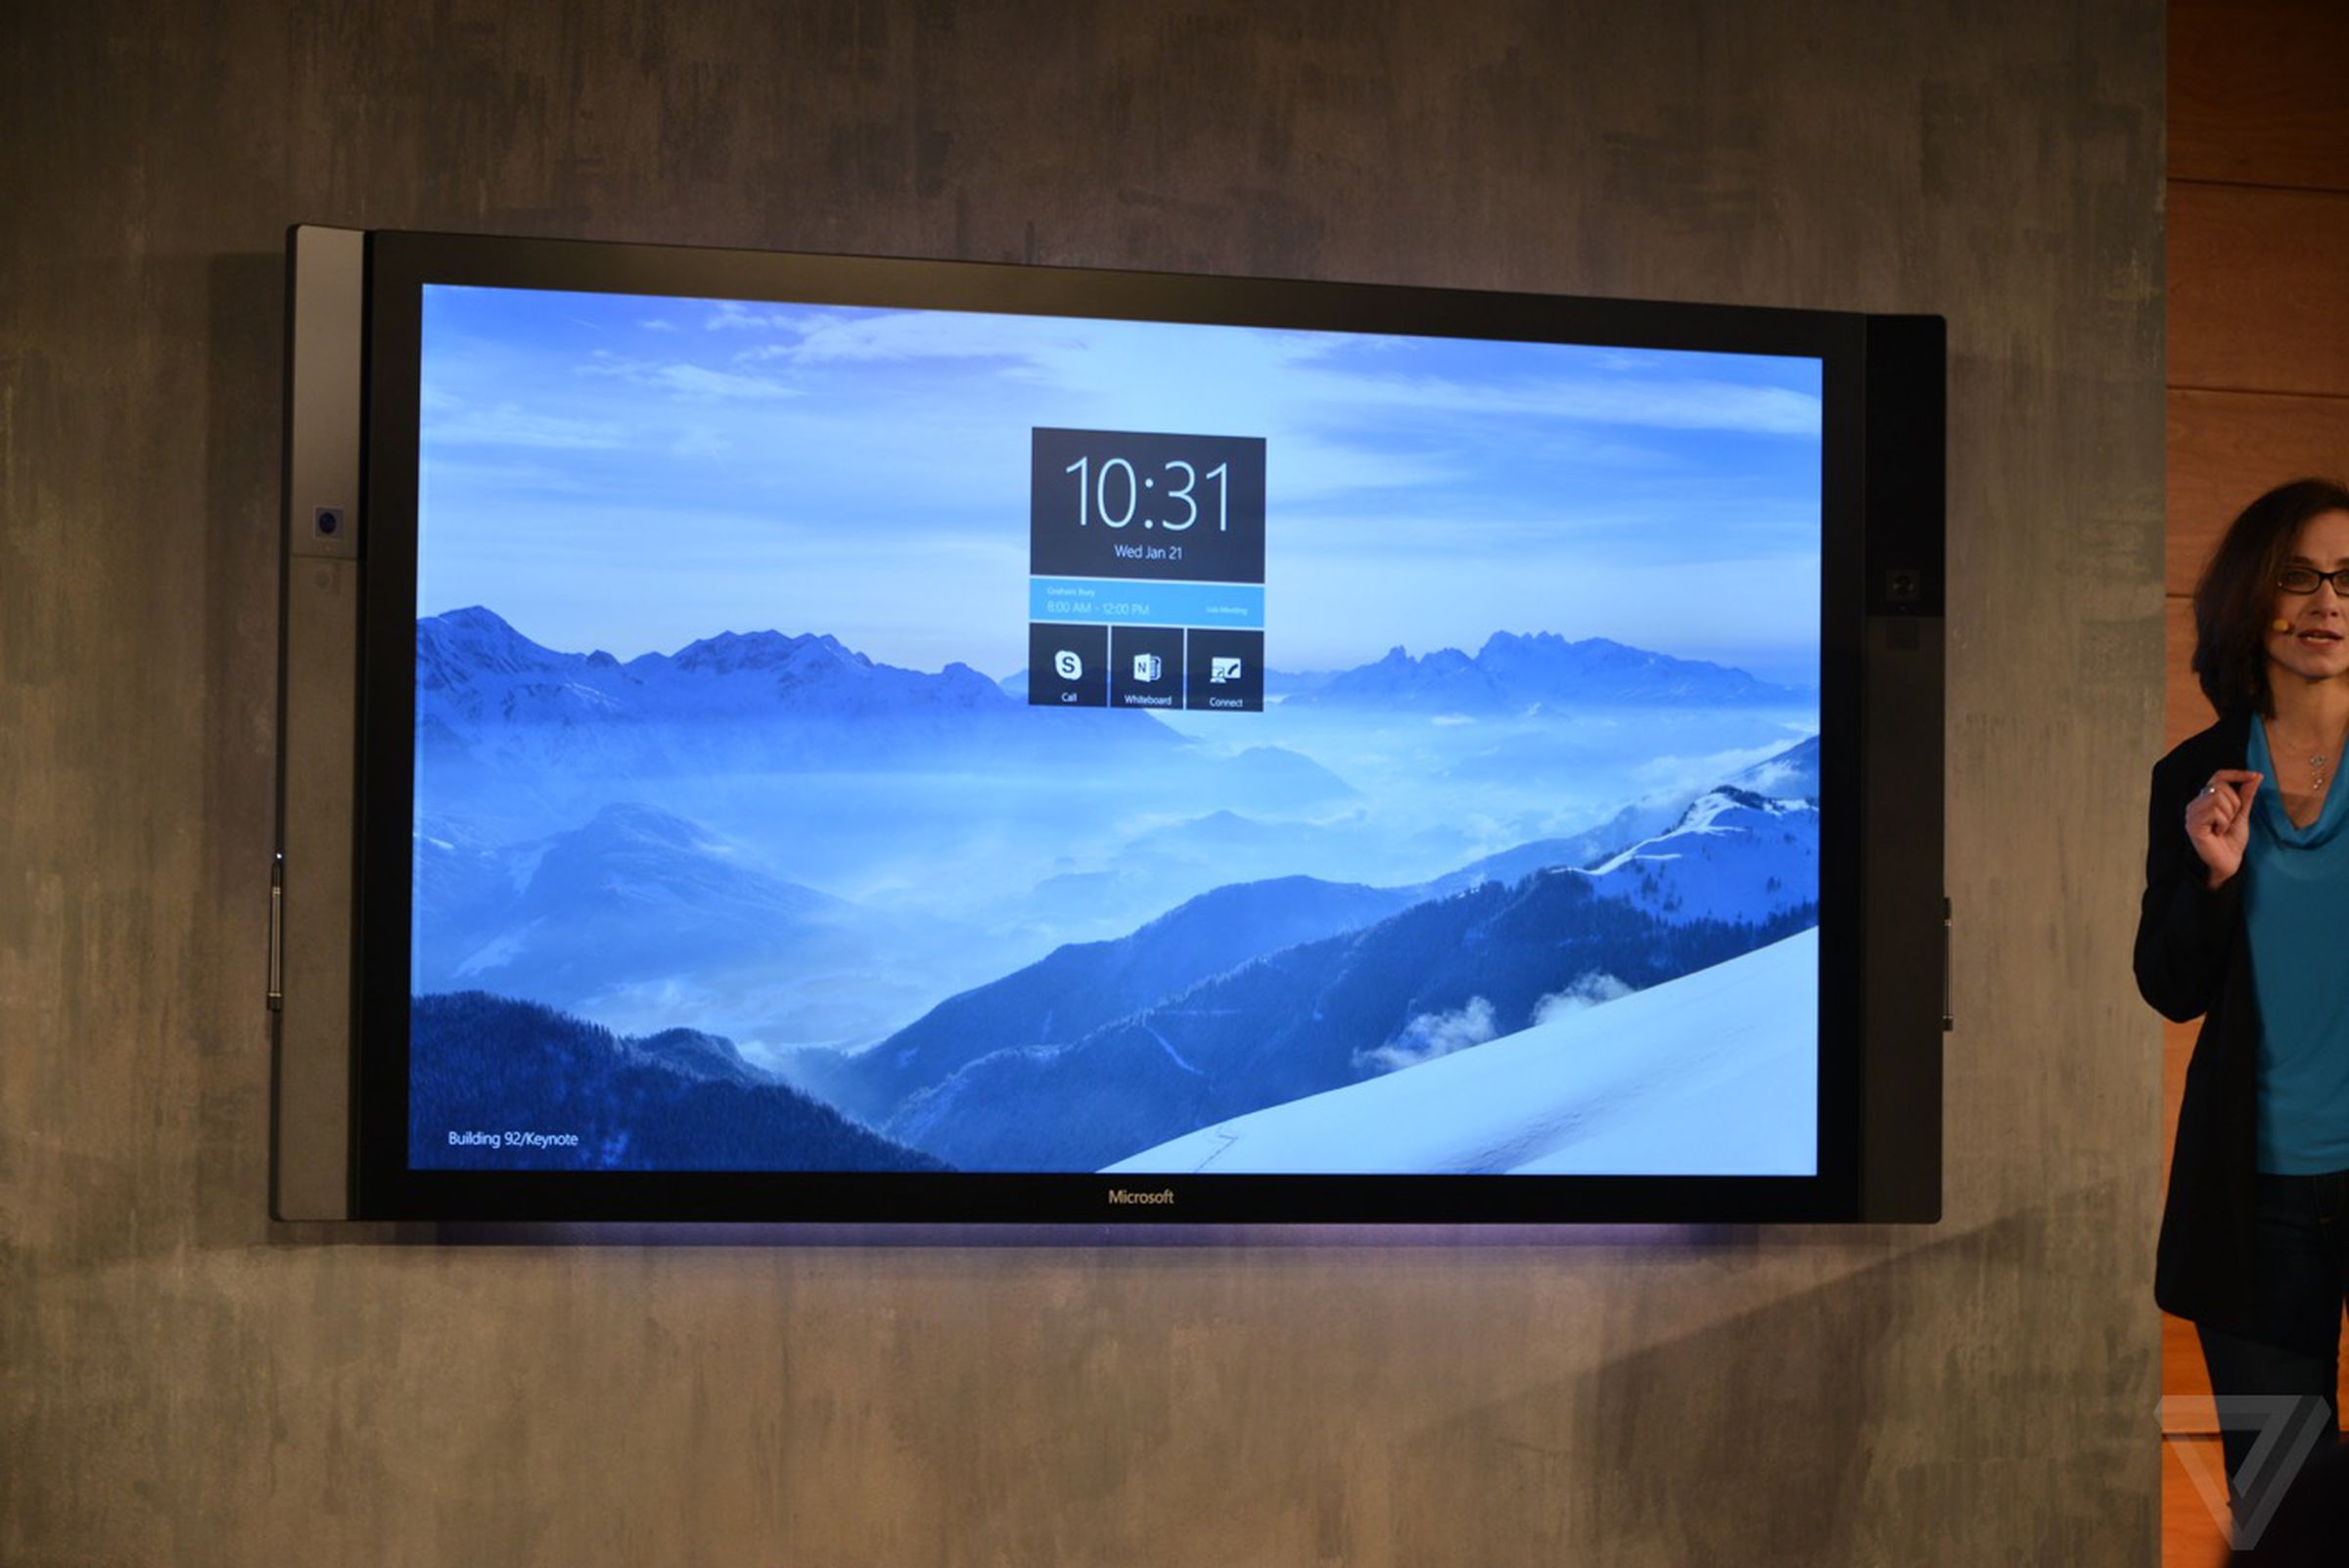 Microsoft Surface Hub in photos